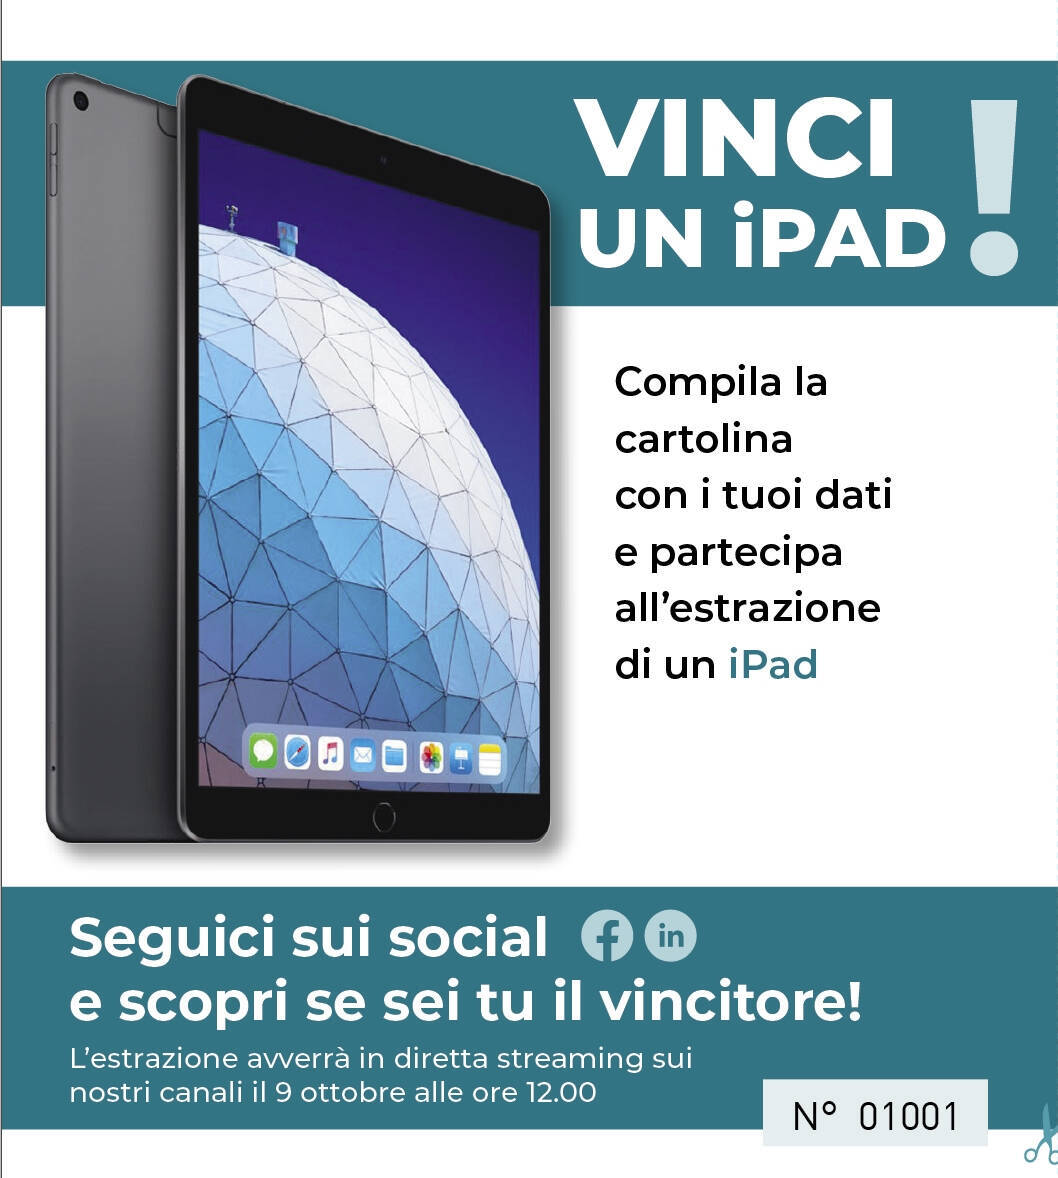 Vinci un iPad con Siramed